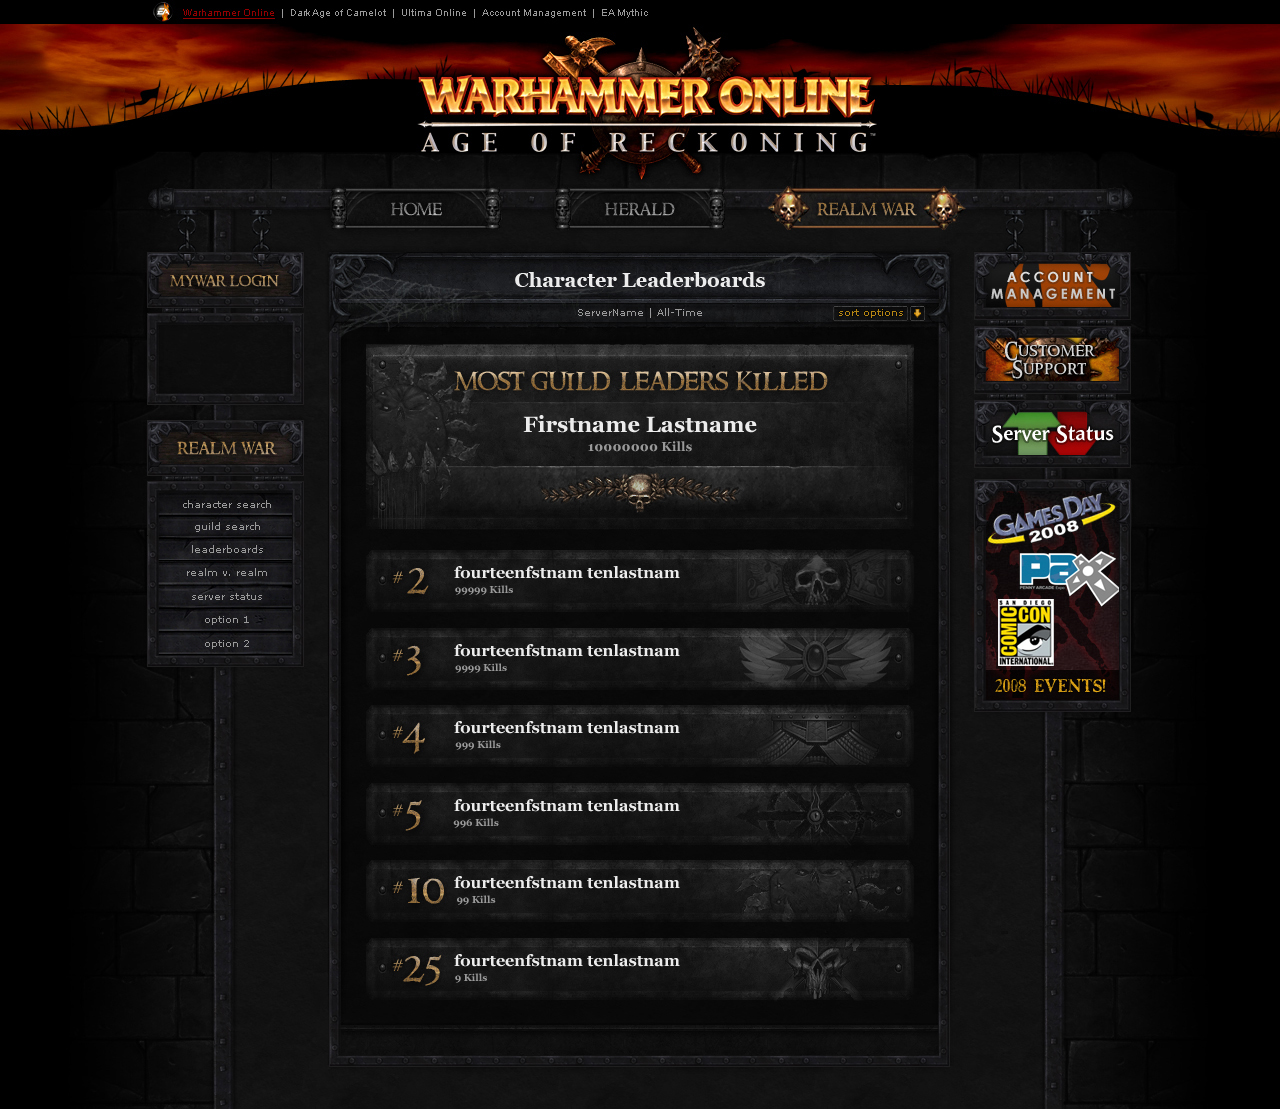 Warhammer Online - Launch Site - Realm War Leaderboard Listings